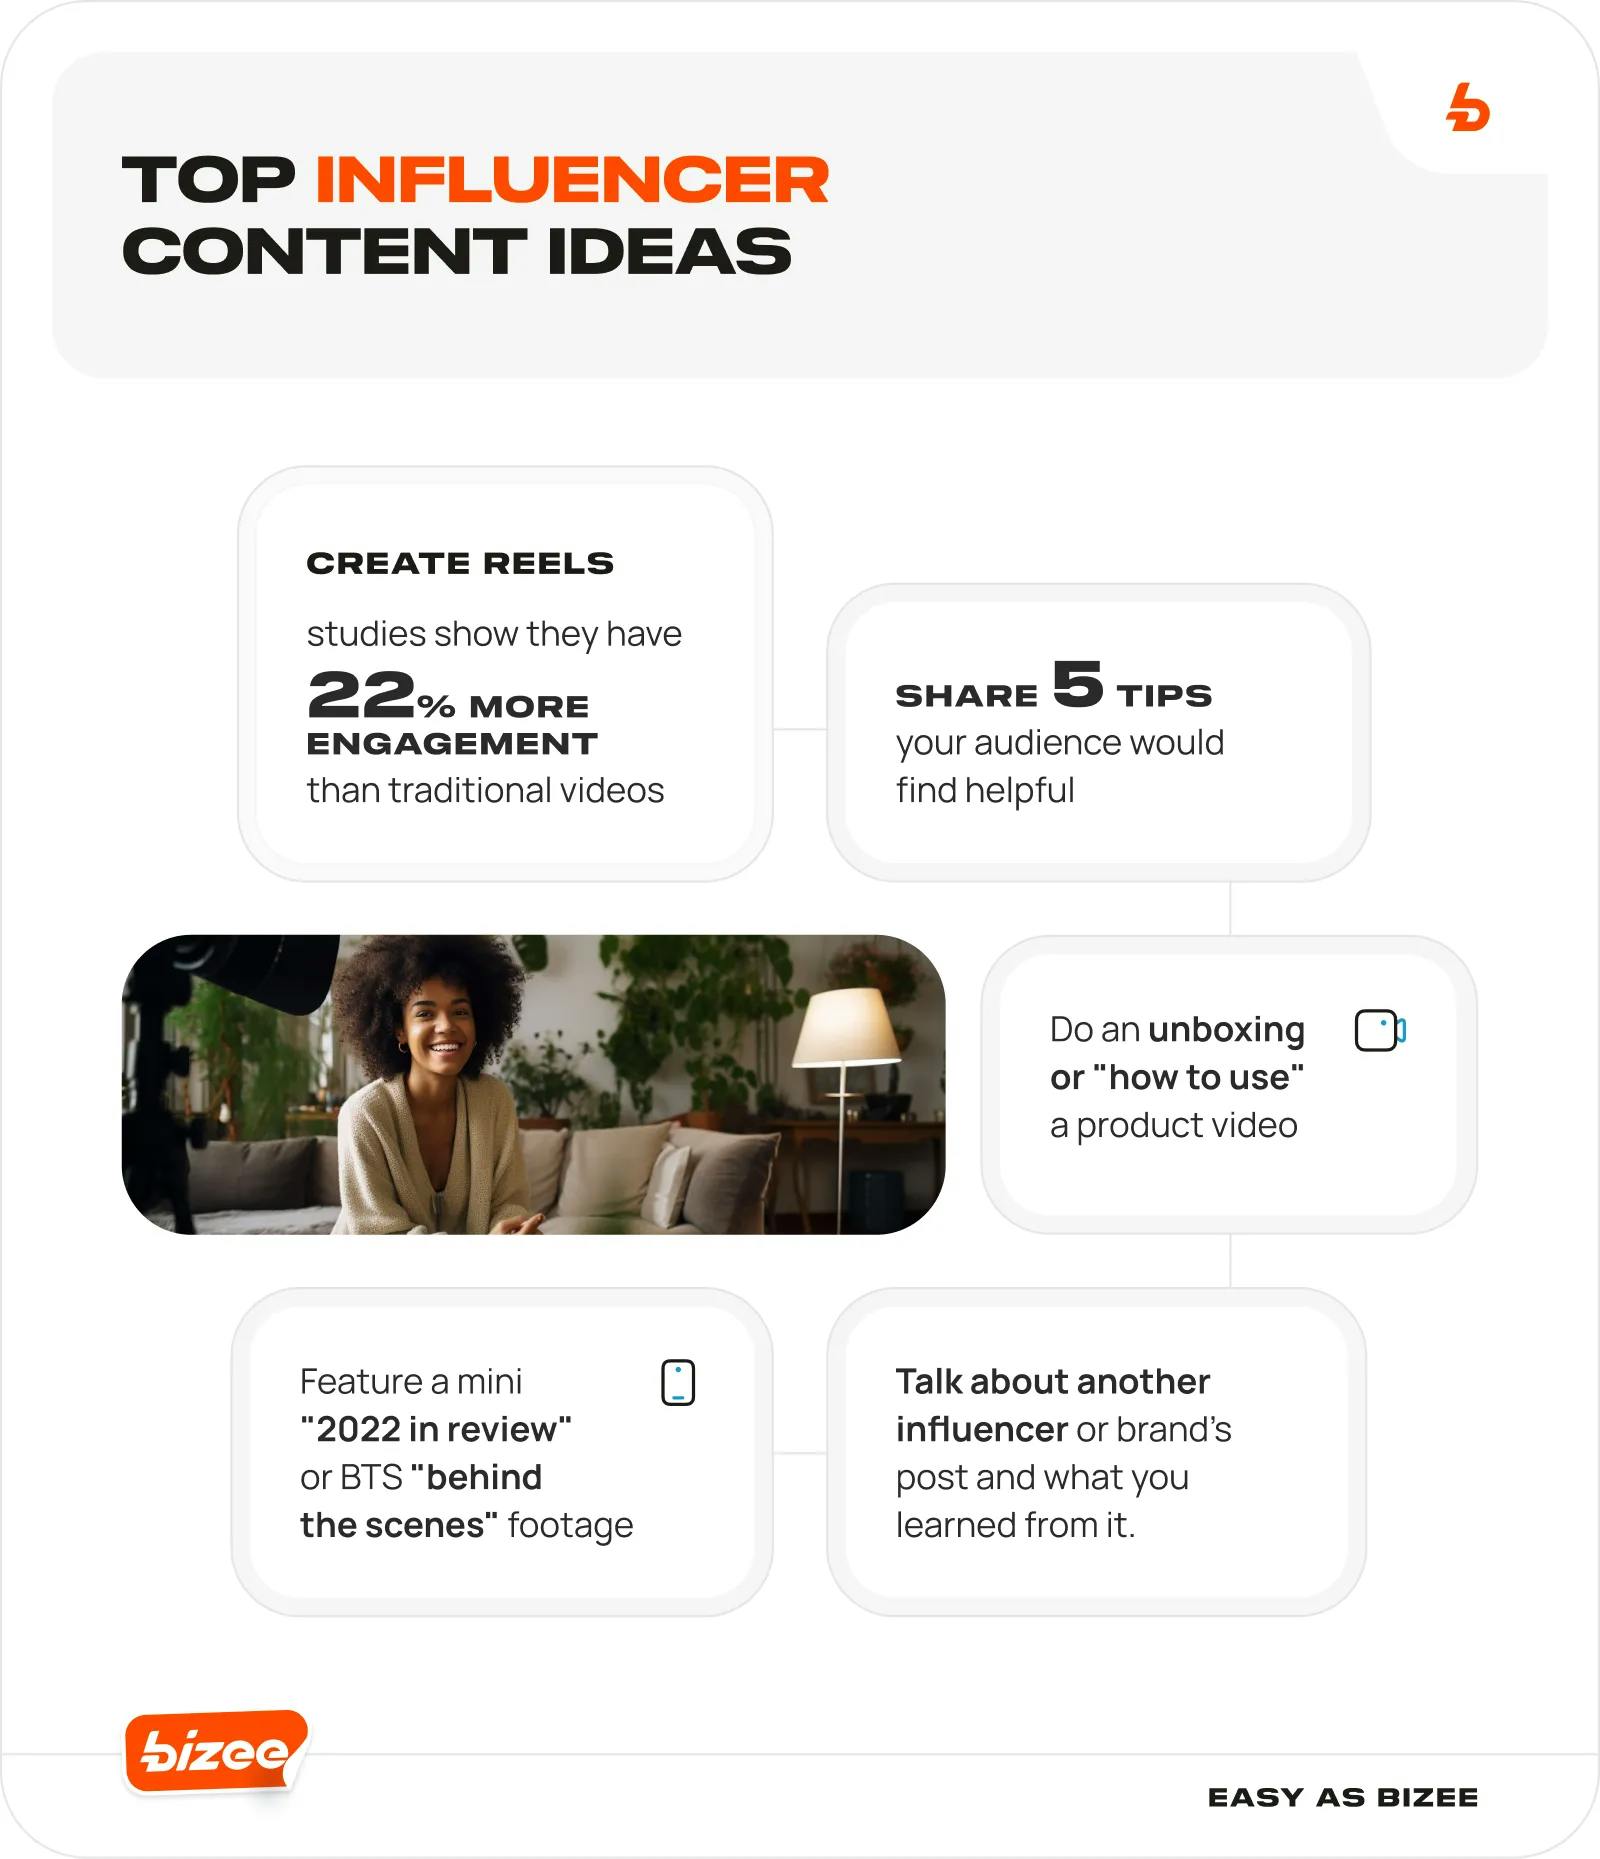 Top Influencer Content Ideas